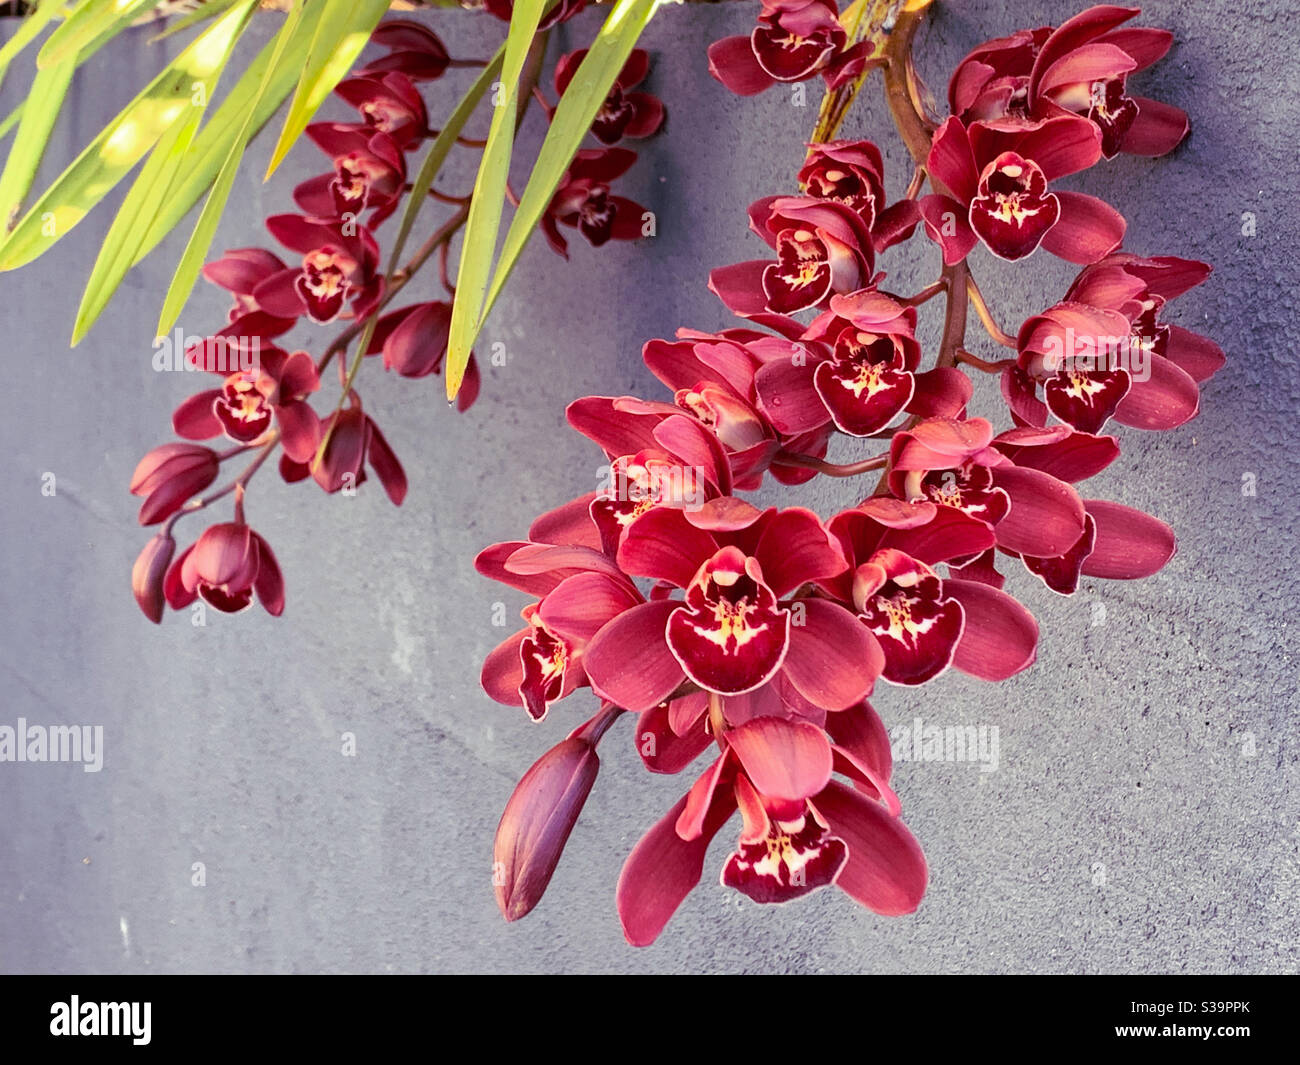 Stems full of rich red Cymbidium orchids Stock Photo